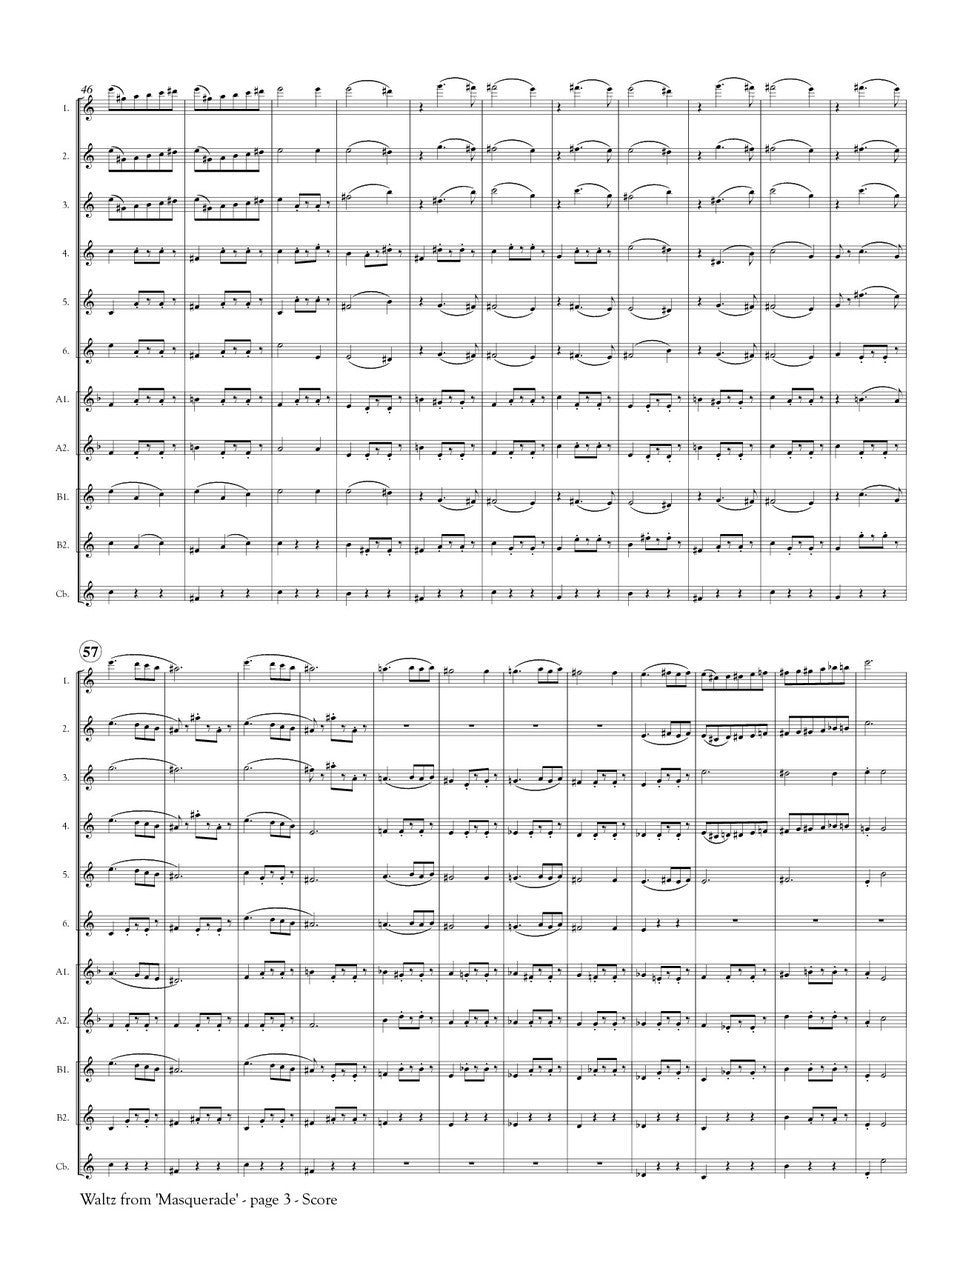 Waltz (from Masquerade) Violin 1 Sheet Music by Aram